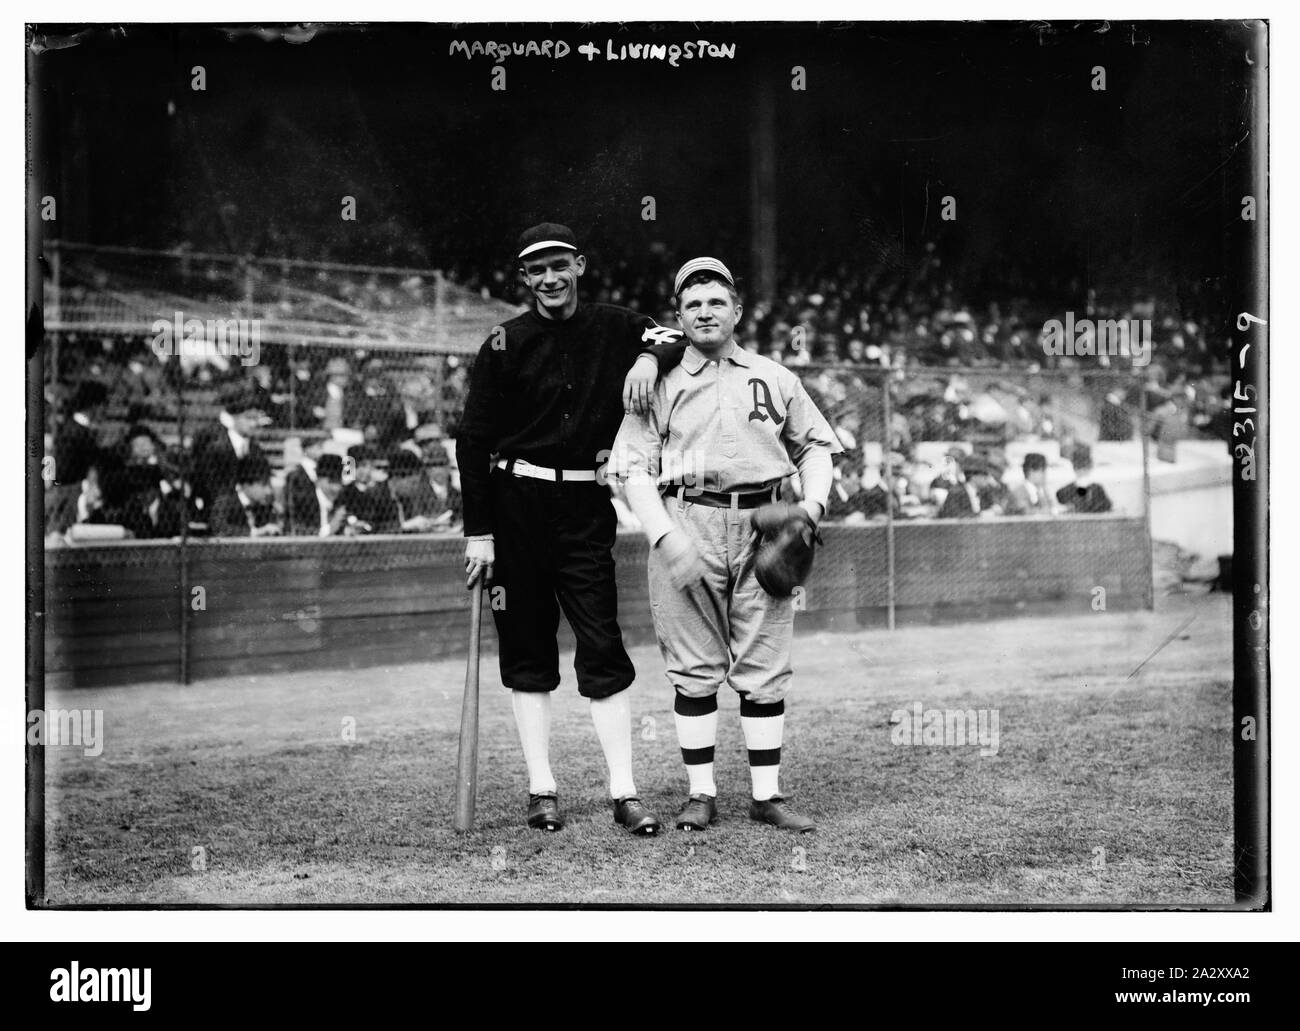 Rube Marquard, New York, NL & Paddy Livingston, Philadelphia, AL at World Series (baseball) Stock Photo